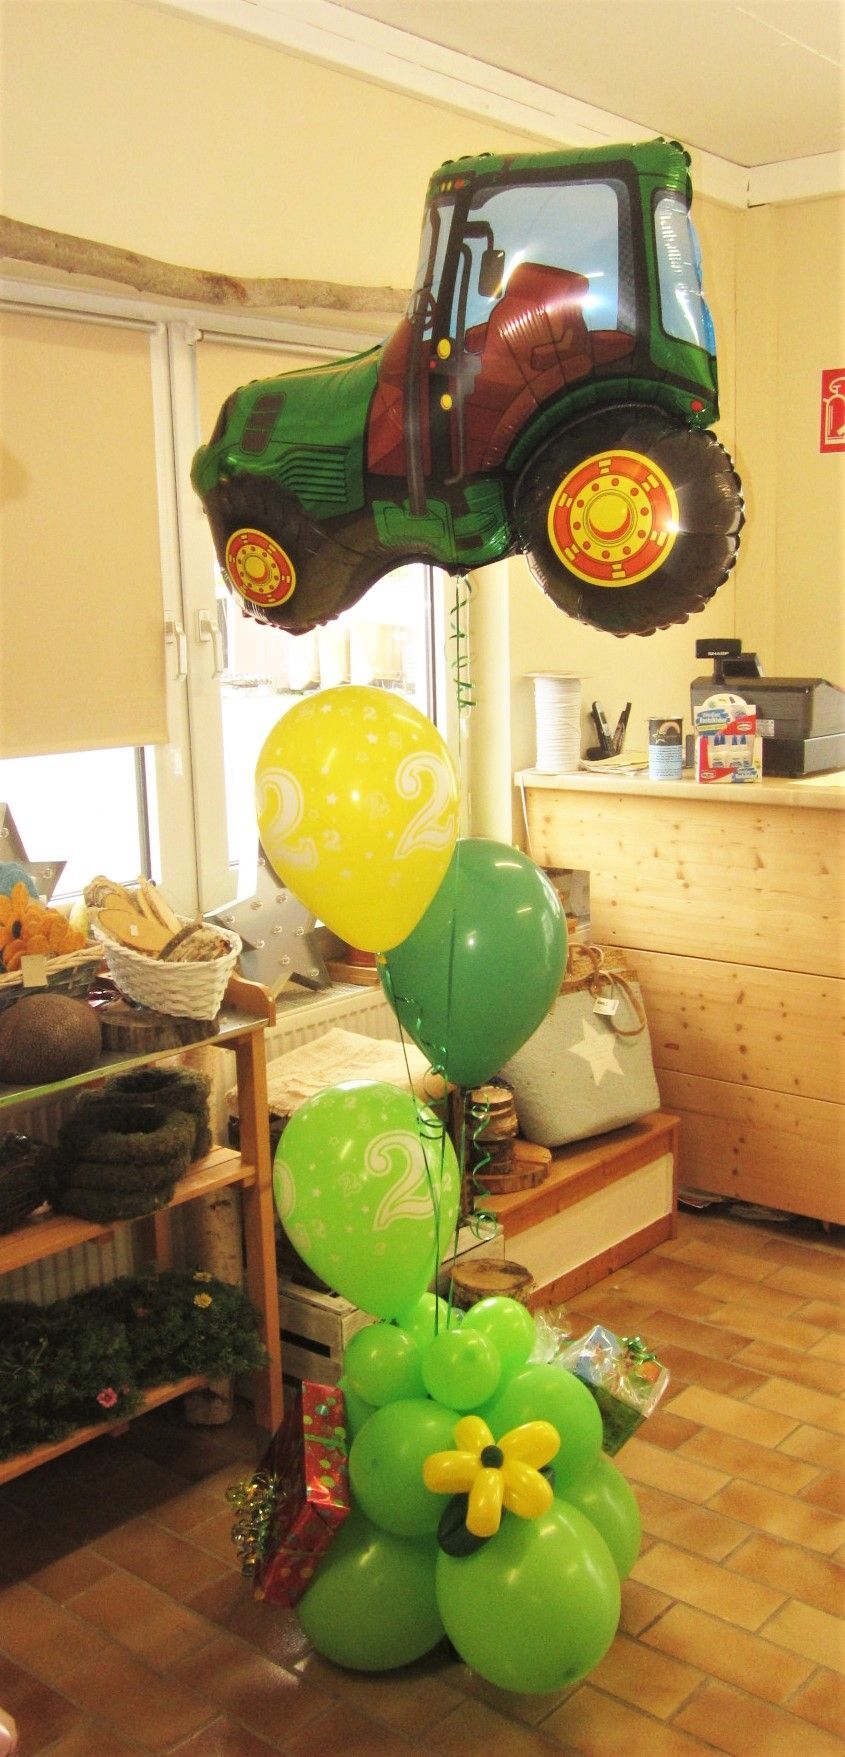 Ballonarrangement, Folienballon Traktor, Folienballon Worms, Latexballons, Luftballons Worms